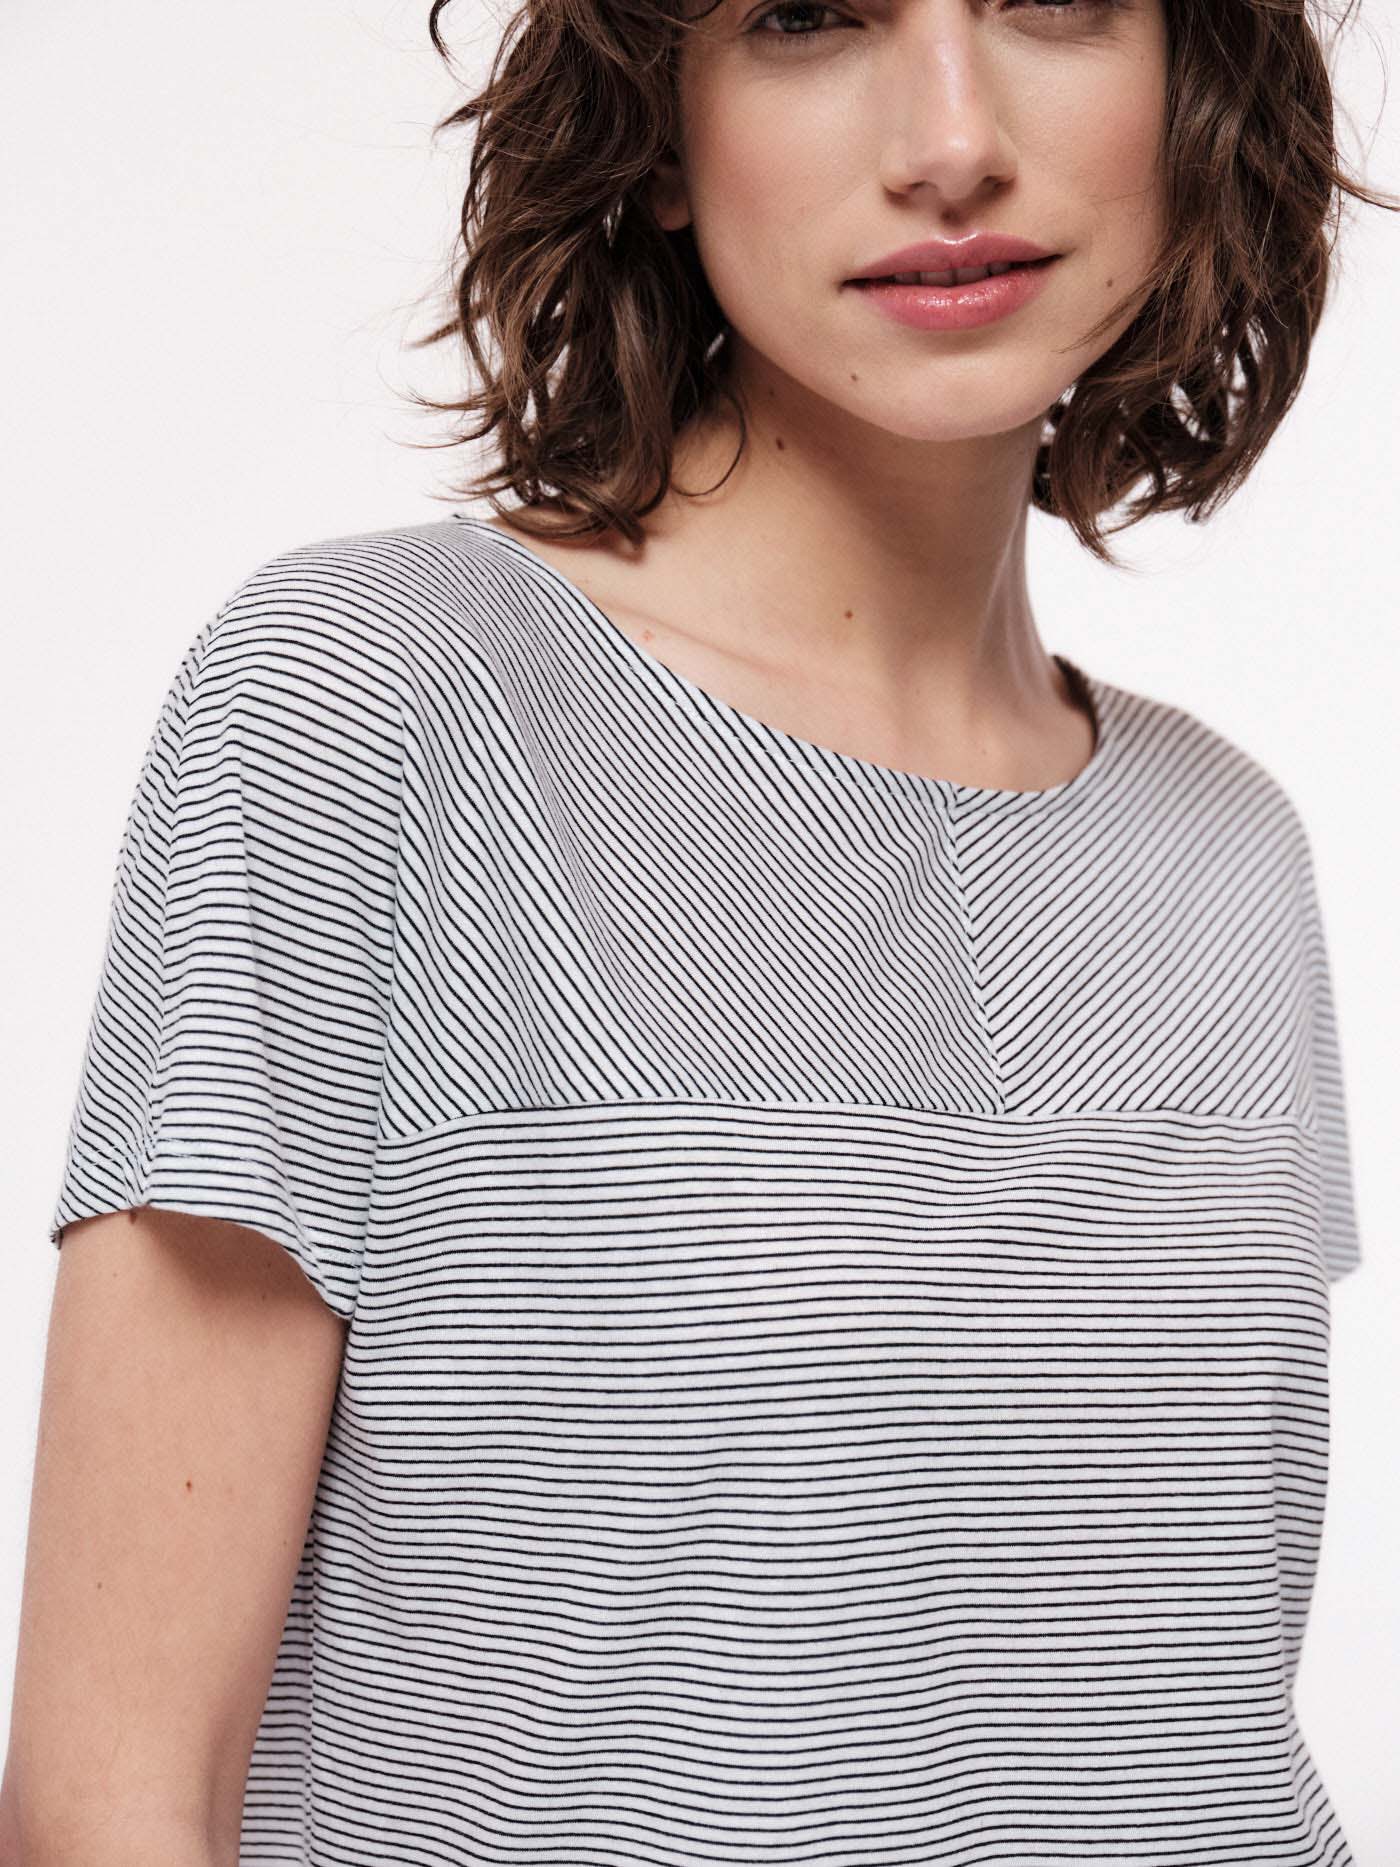 Kurzarm-Shirt mit Streifen off white/black